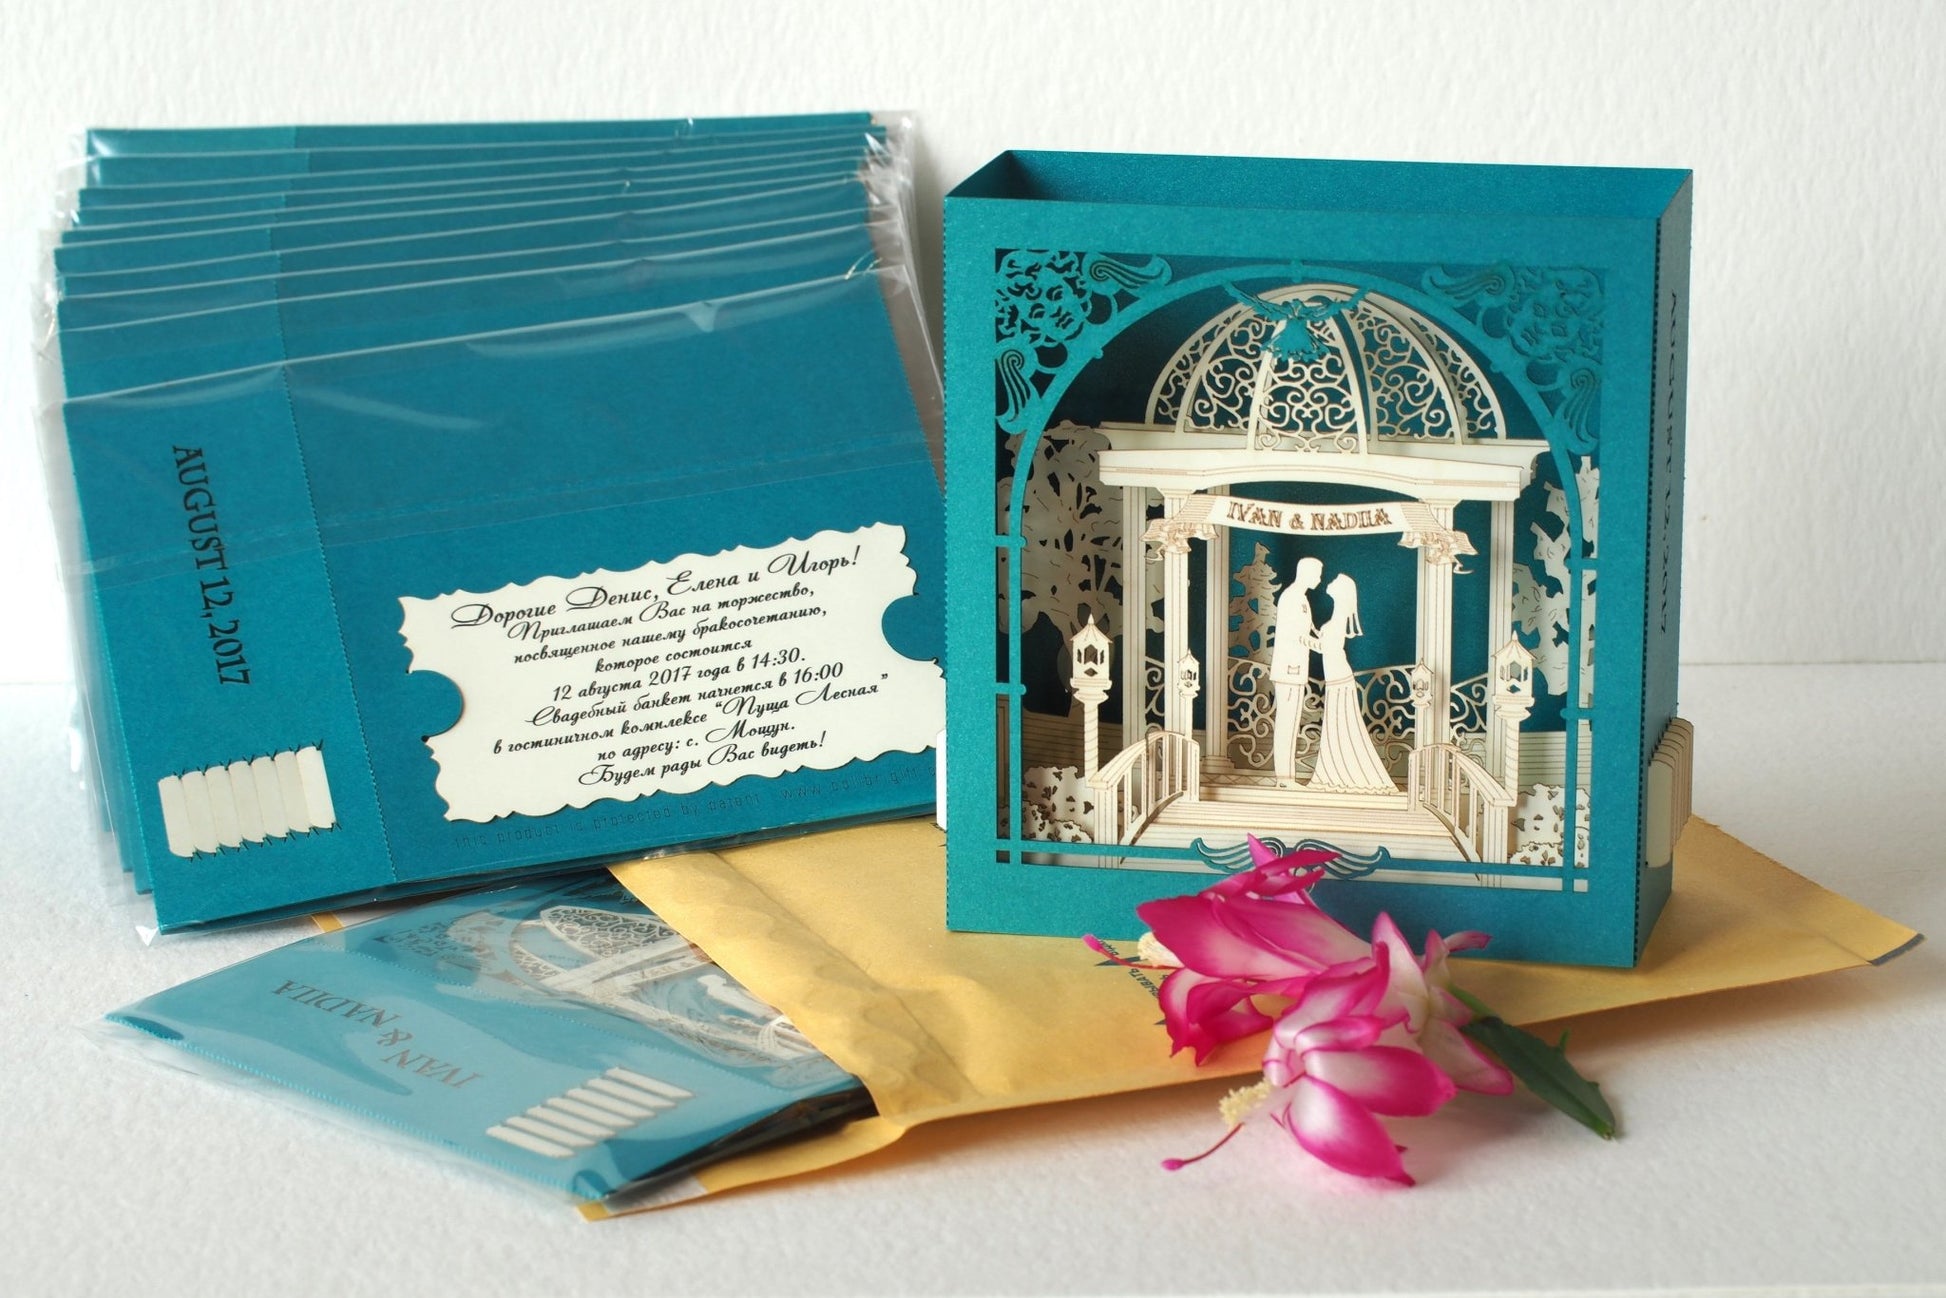 Personalized Wedding Invitation Arch Pavilion Couple Newlyweds Bride Groom pop-up card - ColibriGift